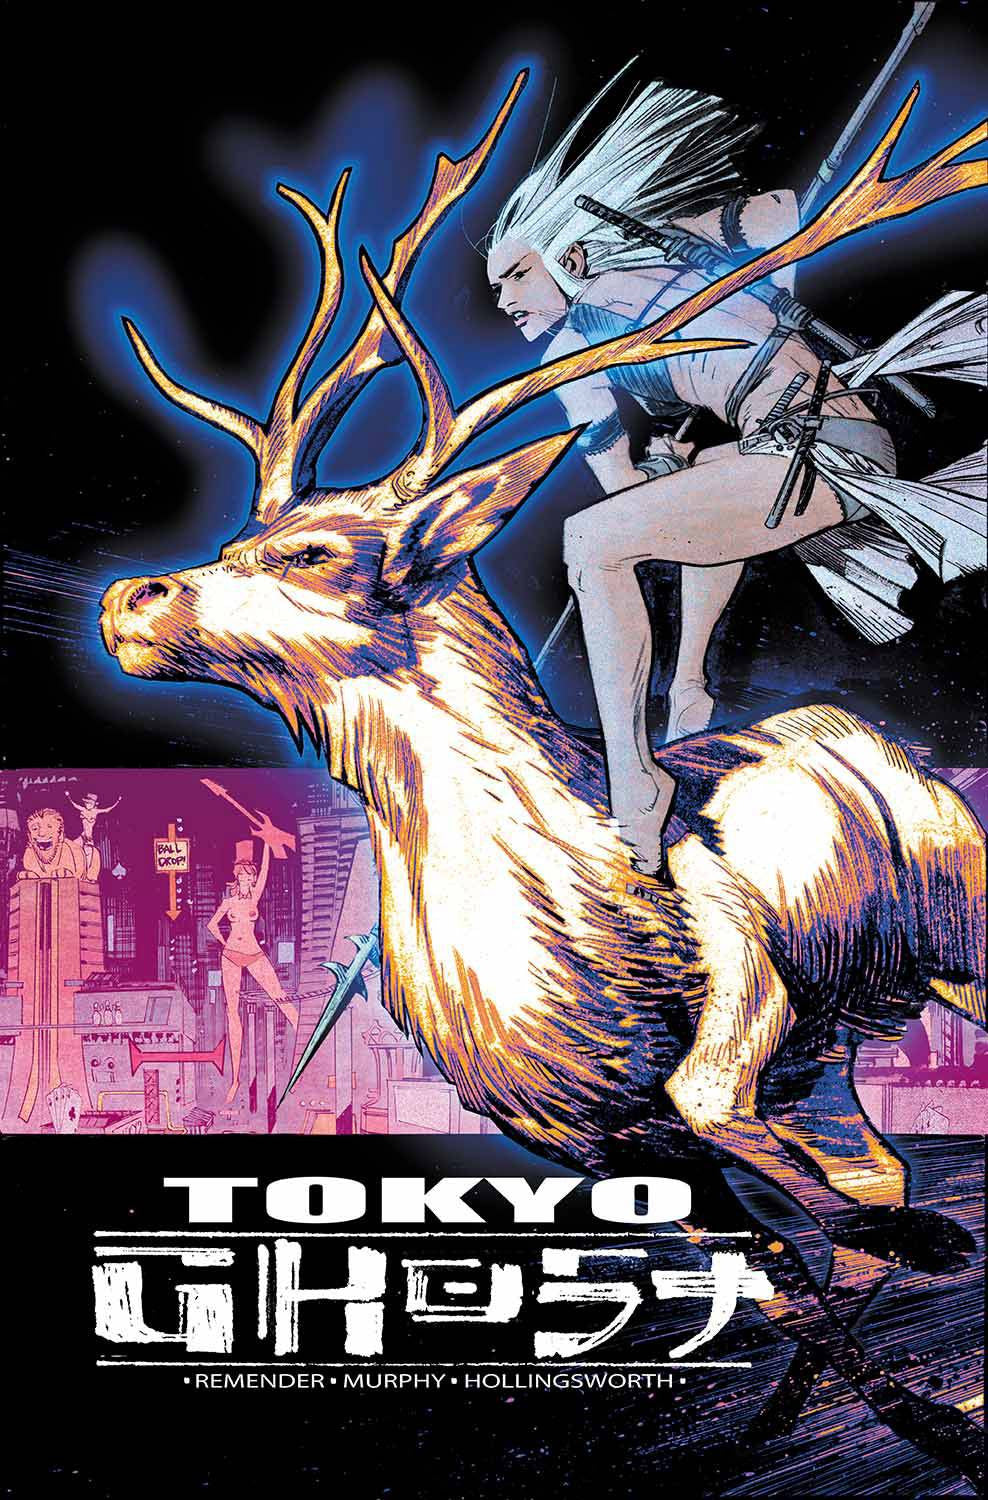 TOKYO GHOST #9 CVR A MURPHY & HOLLINGSWORTH (MR) COVER